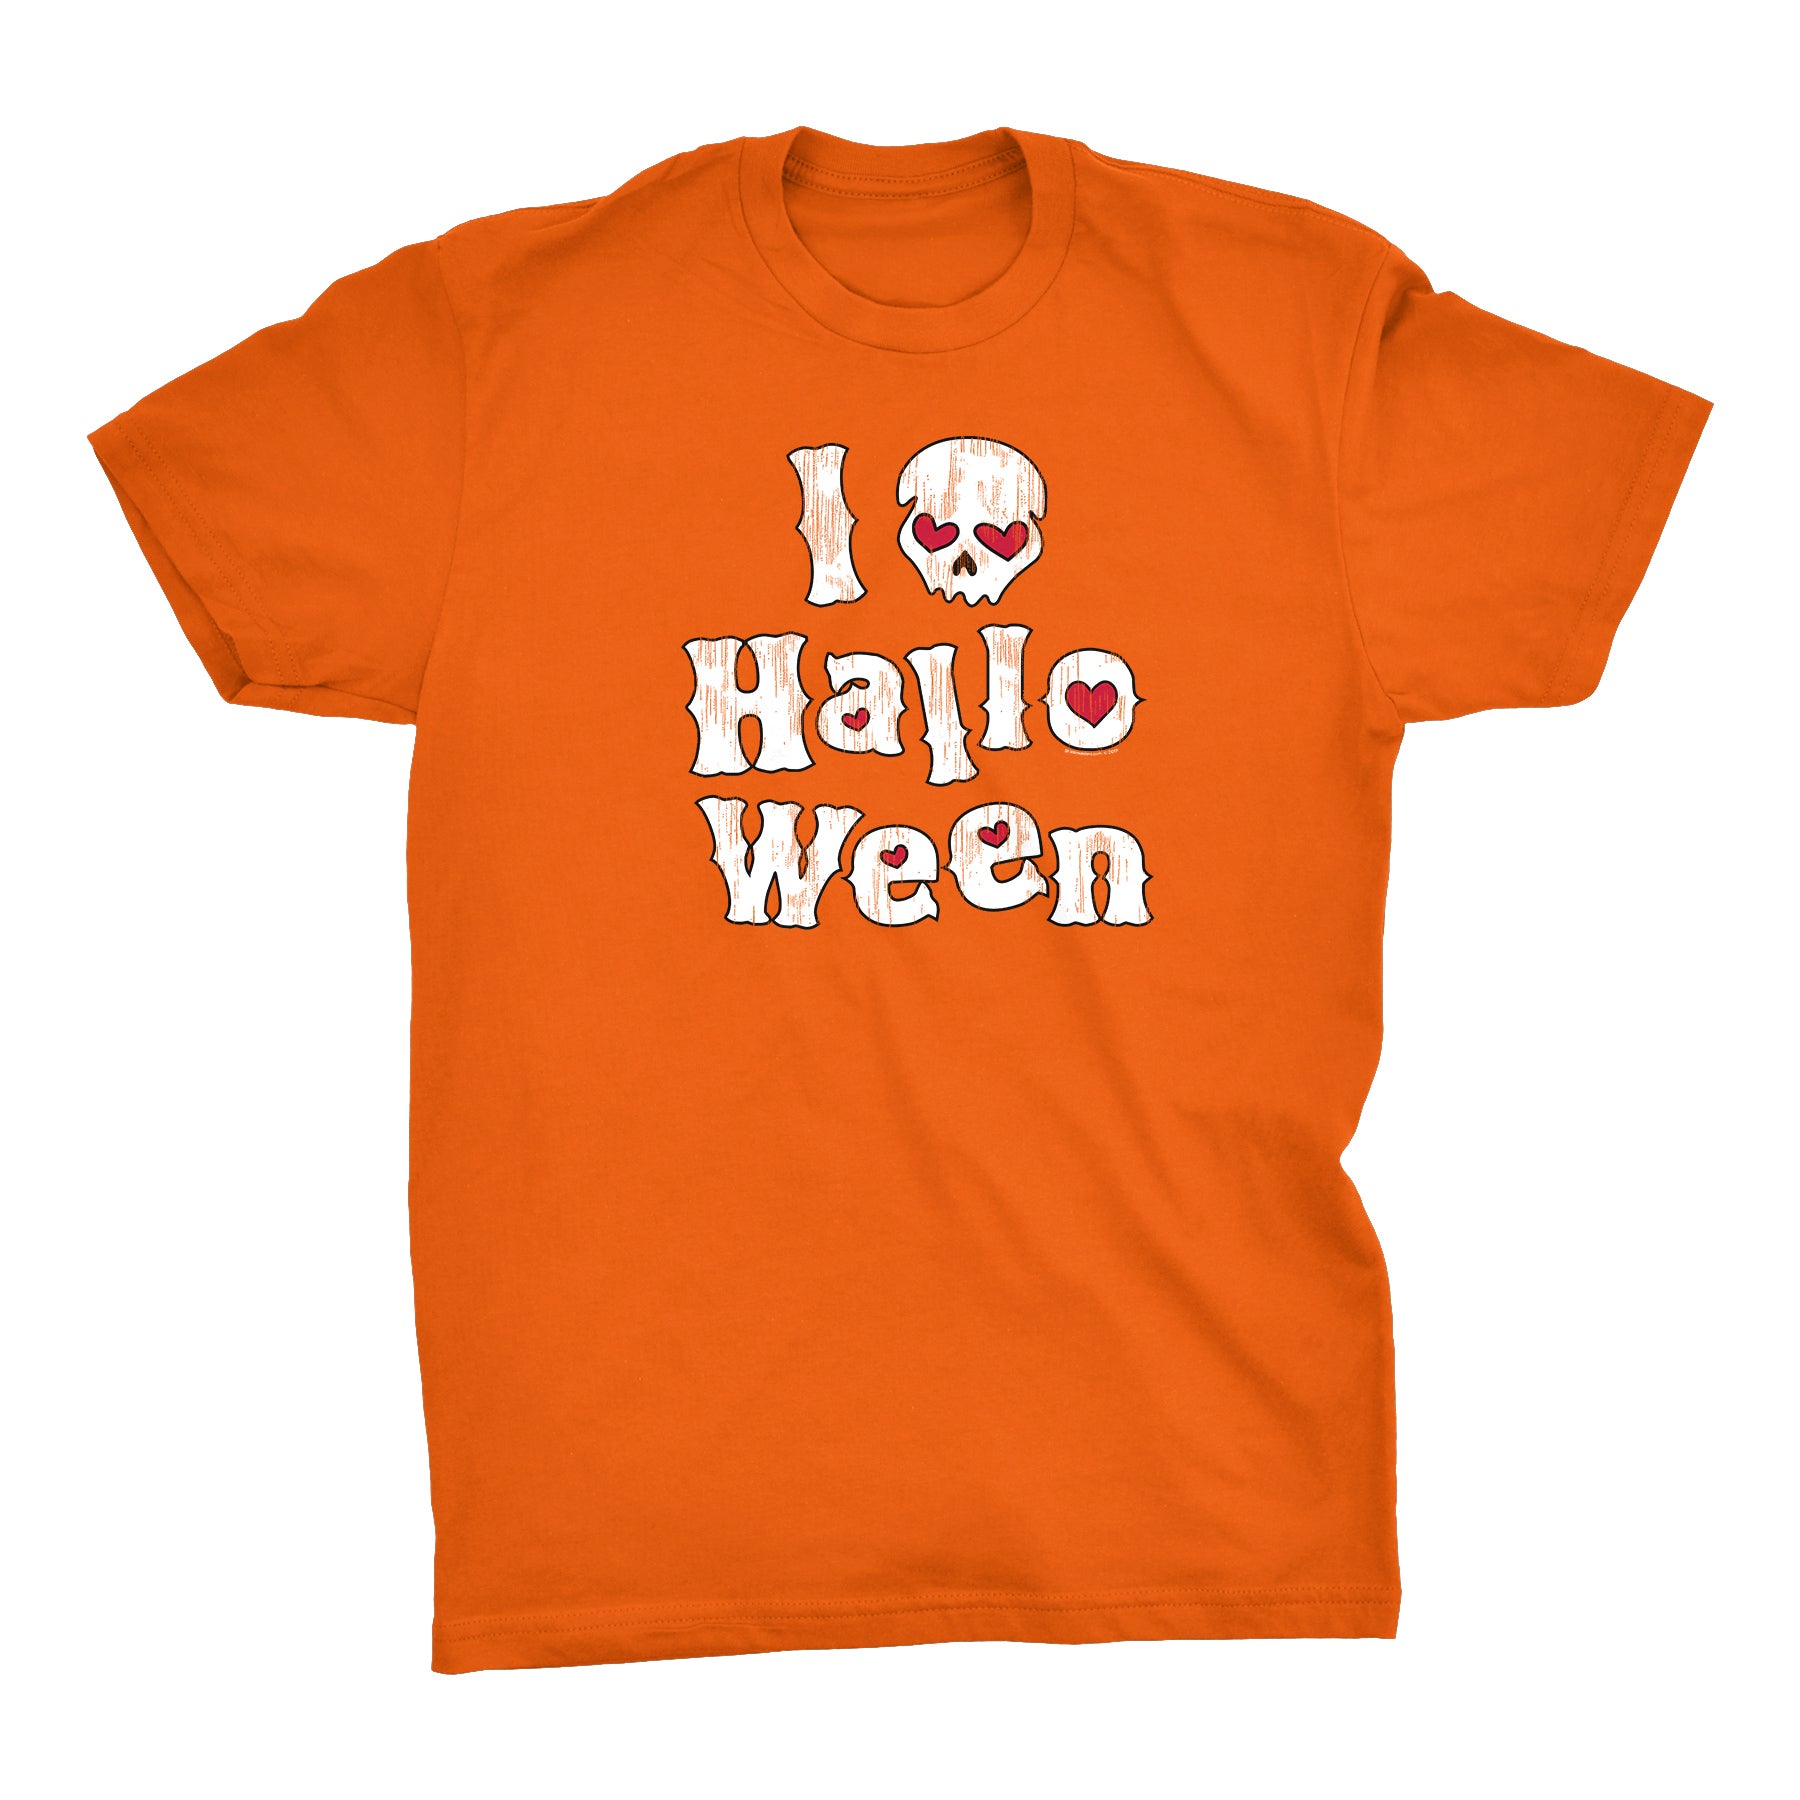 I Love Halloween - Funny Halloween T-Shirt